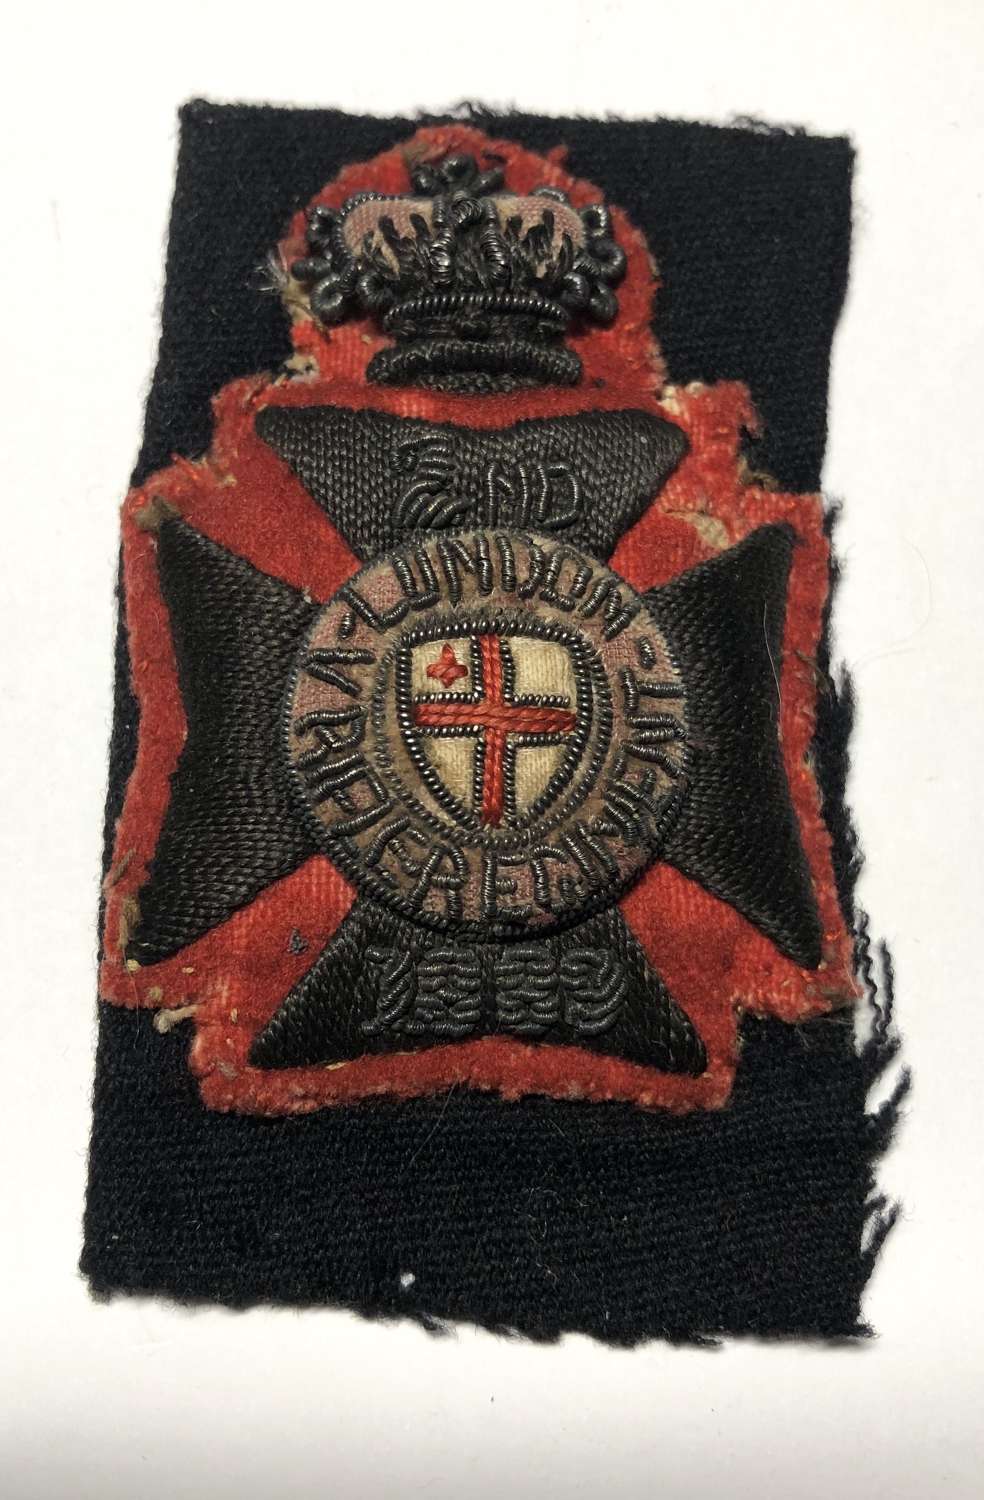 2nd London Rifle Regiment Victorian 1889 shooting award badge